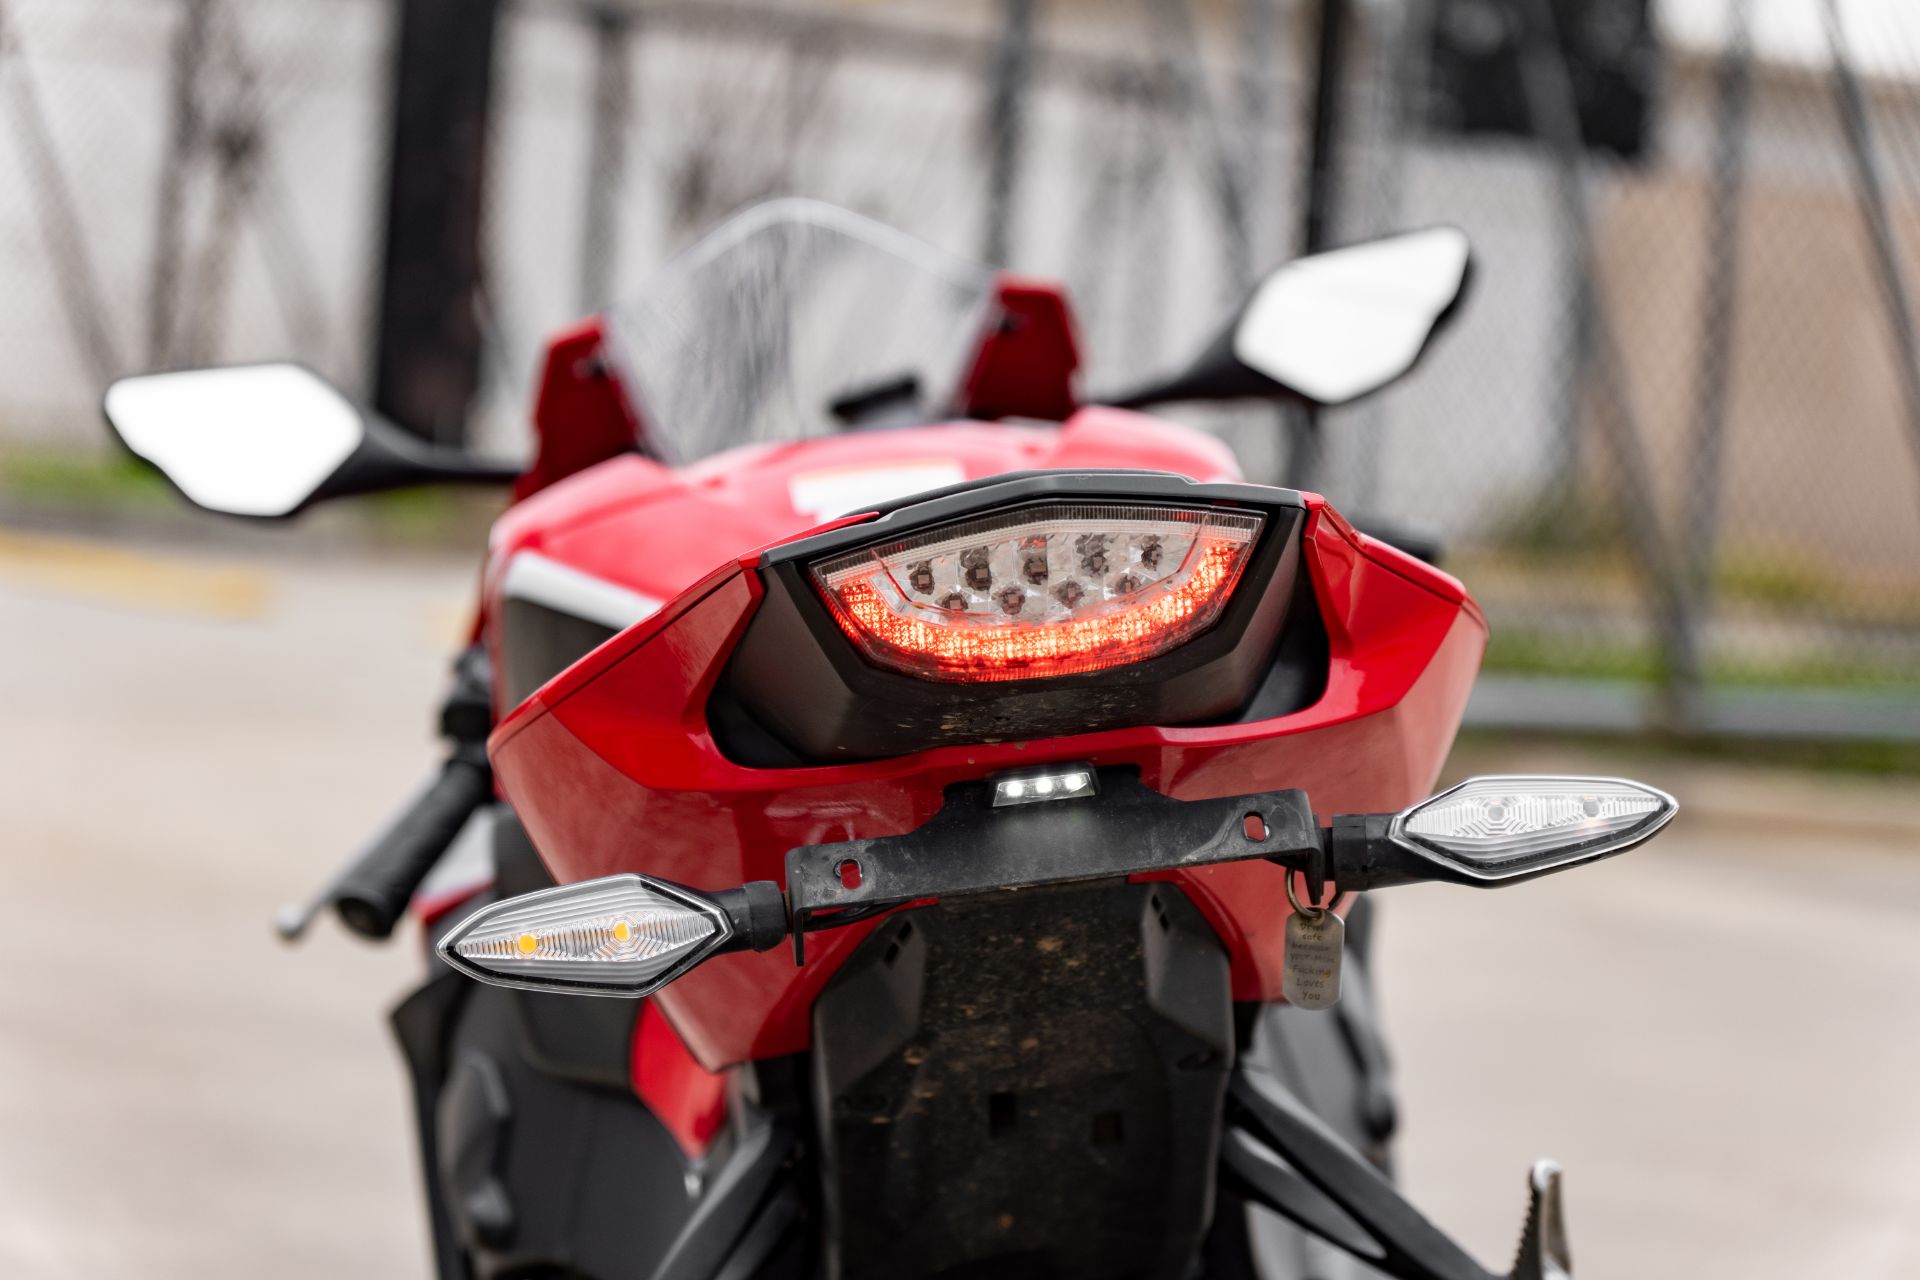 2018 Honda CBR1000RR in Houston, Texas - Photo 13